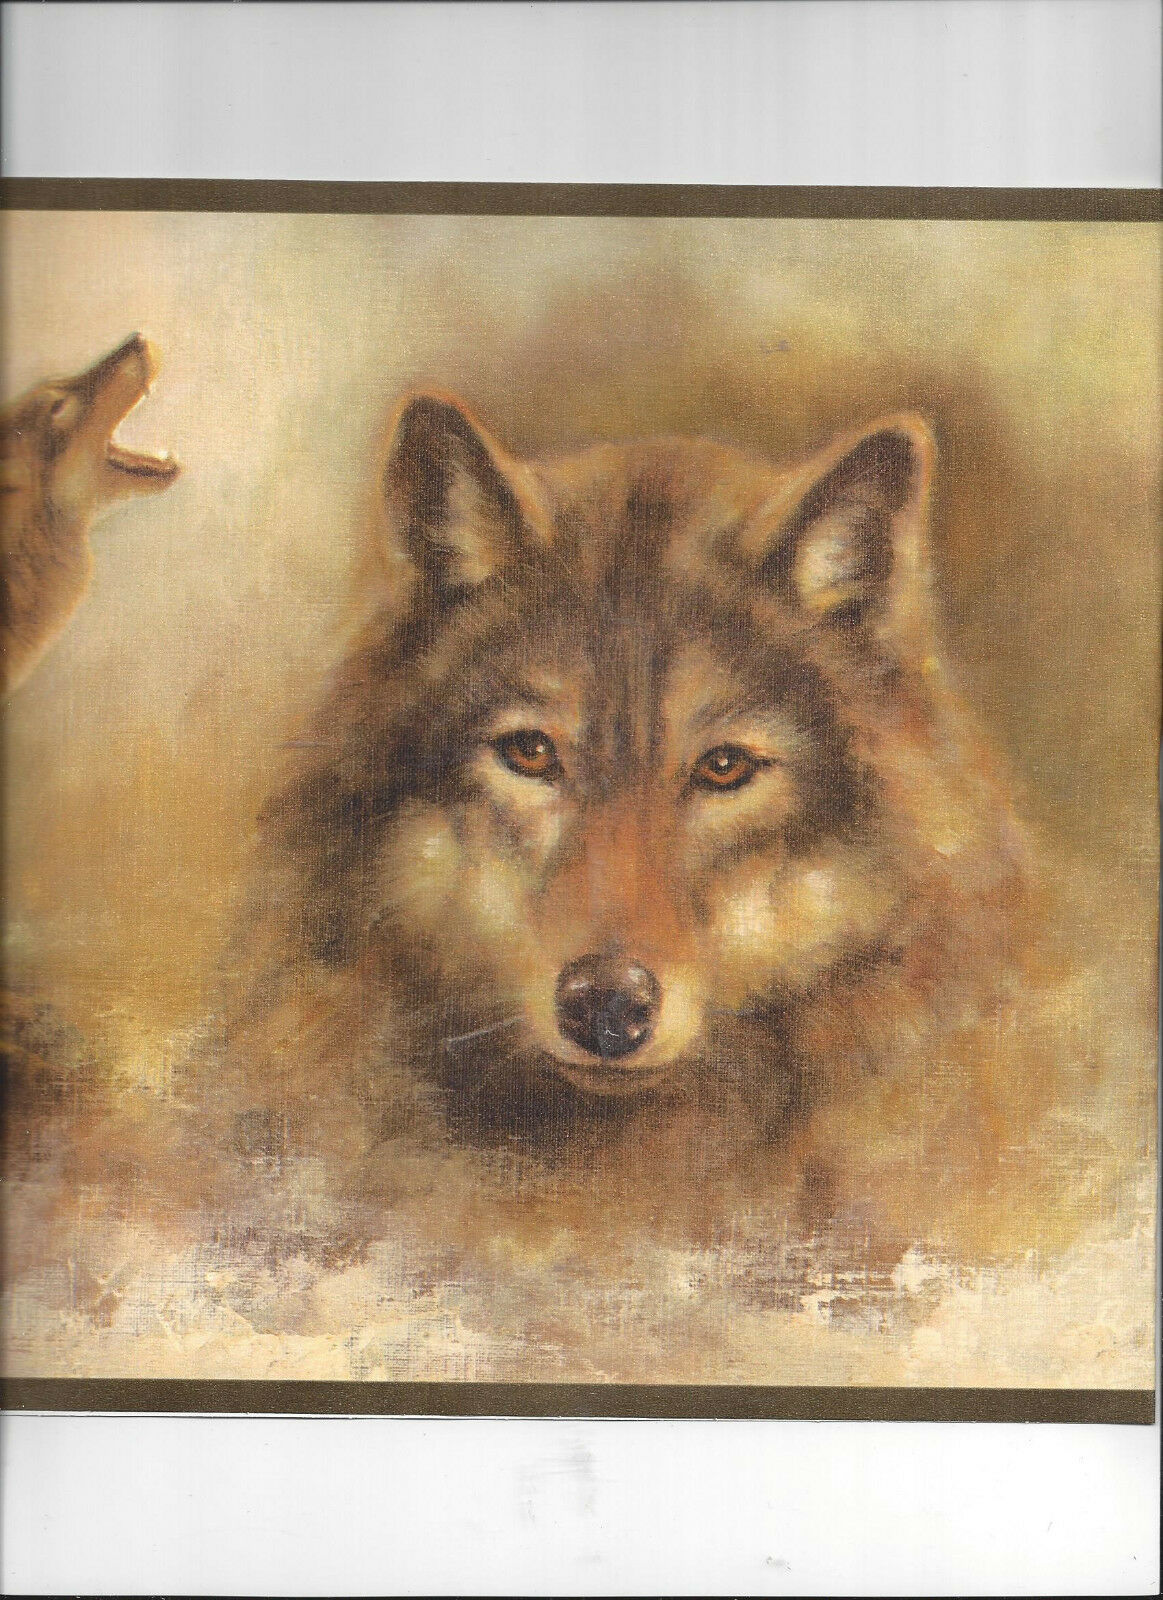 Wallpaper Border Wolves Wolf Nature Wild Animal Hunting Wilderness Green Trim